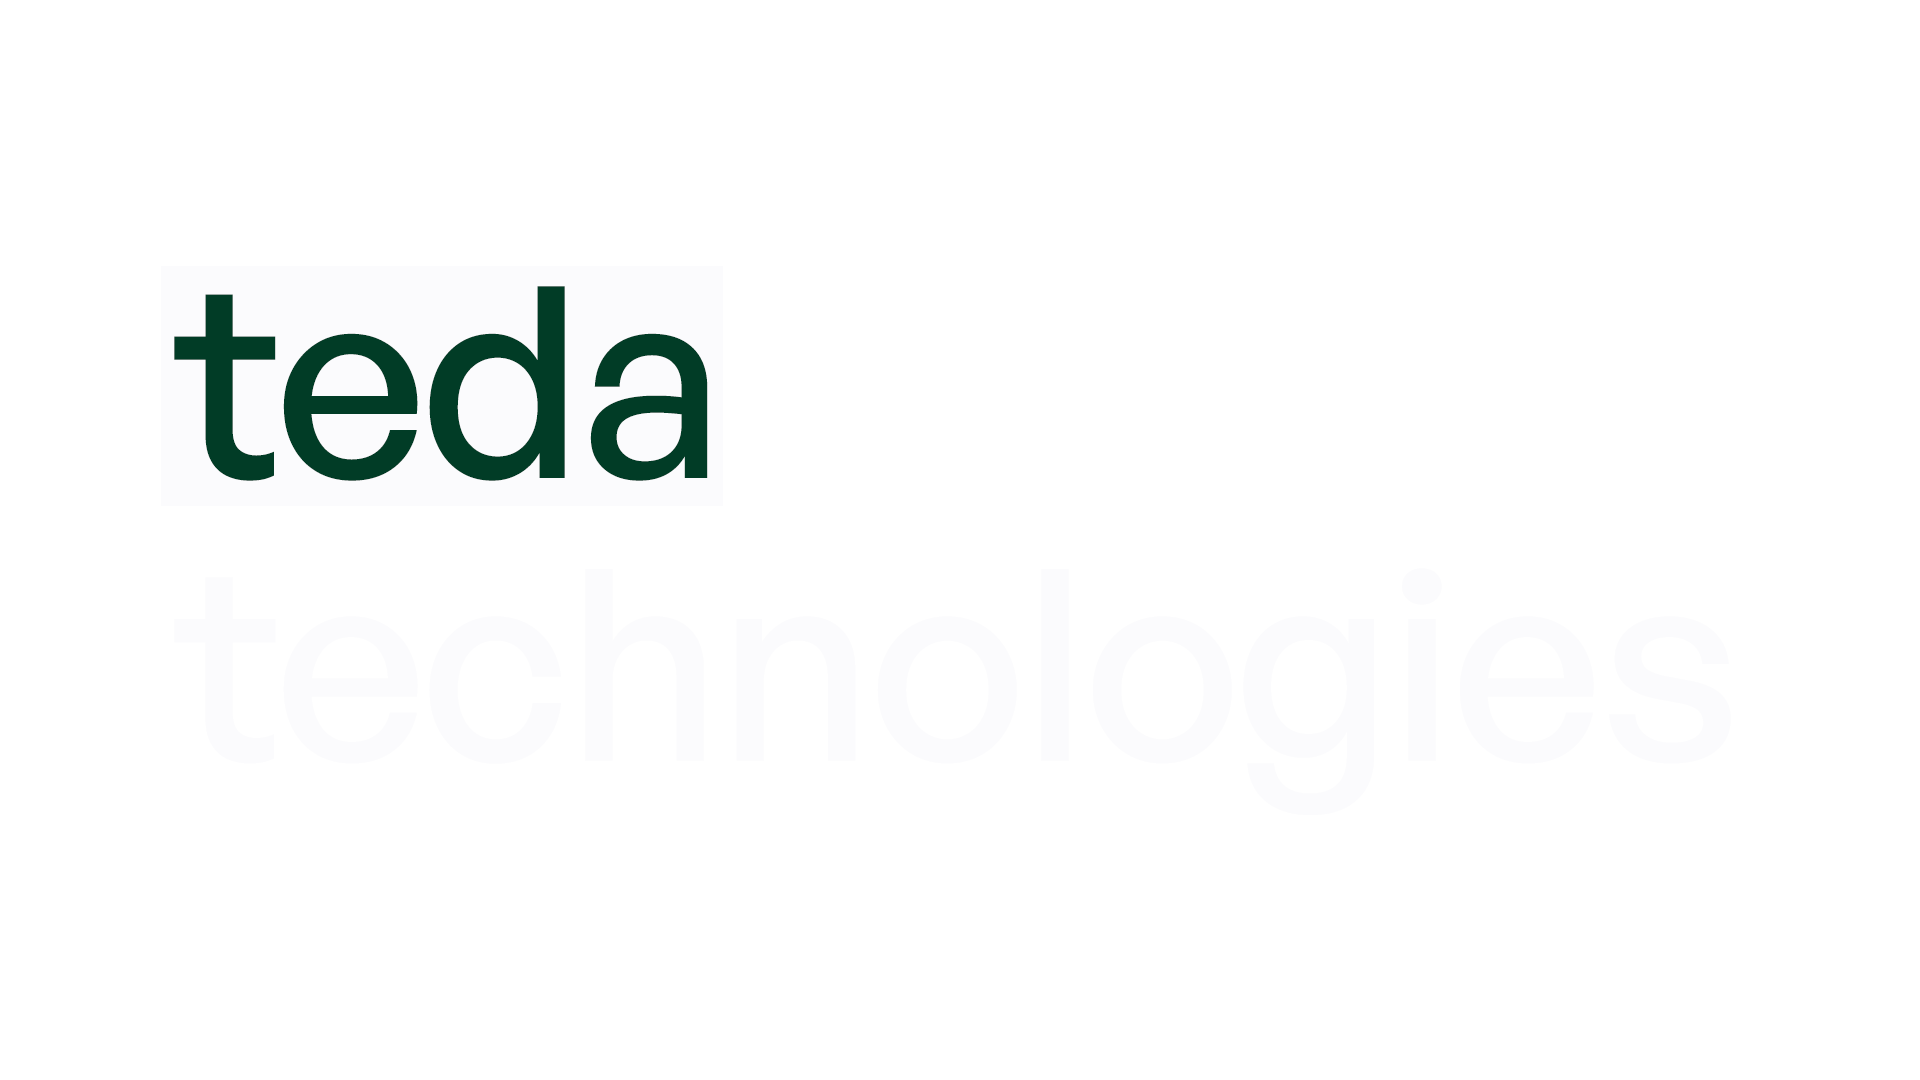 tedatechnologies logo